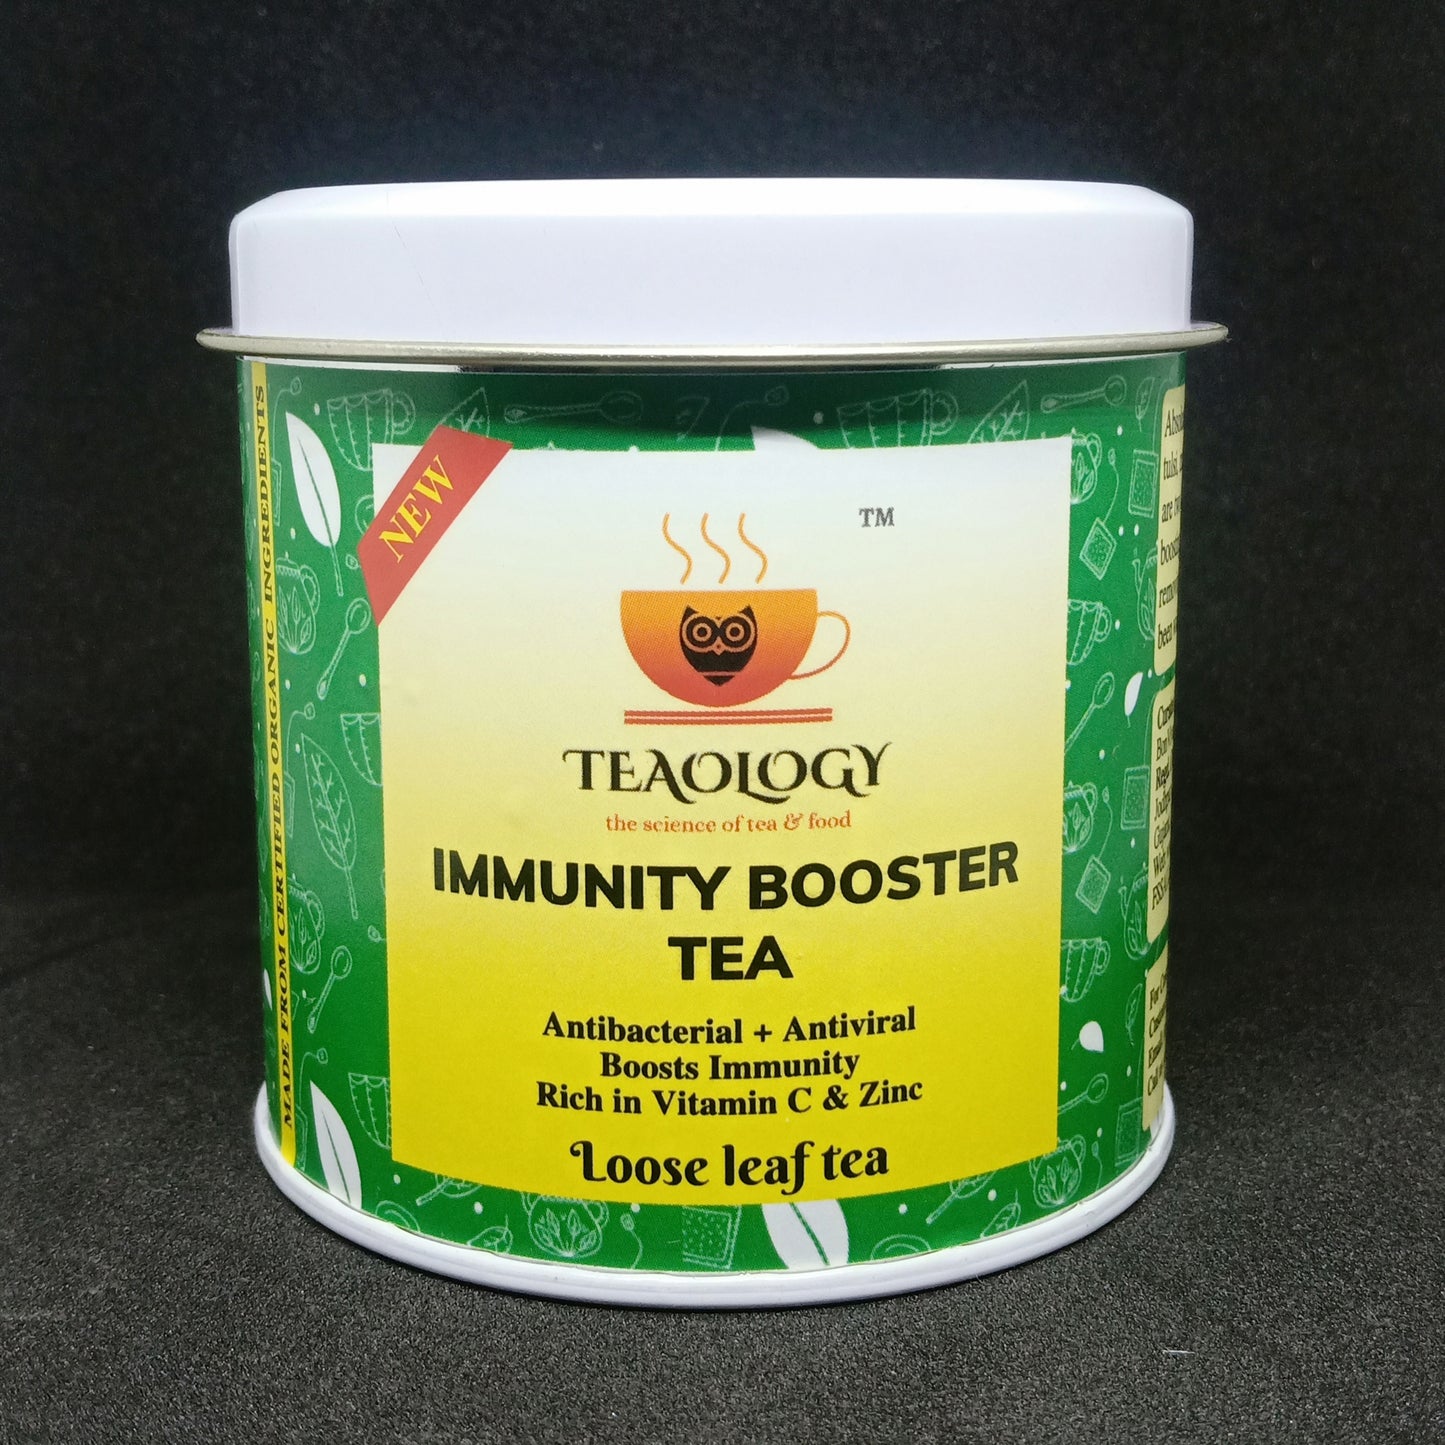 Immunity booster tea, tea, green tea